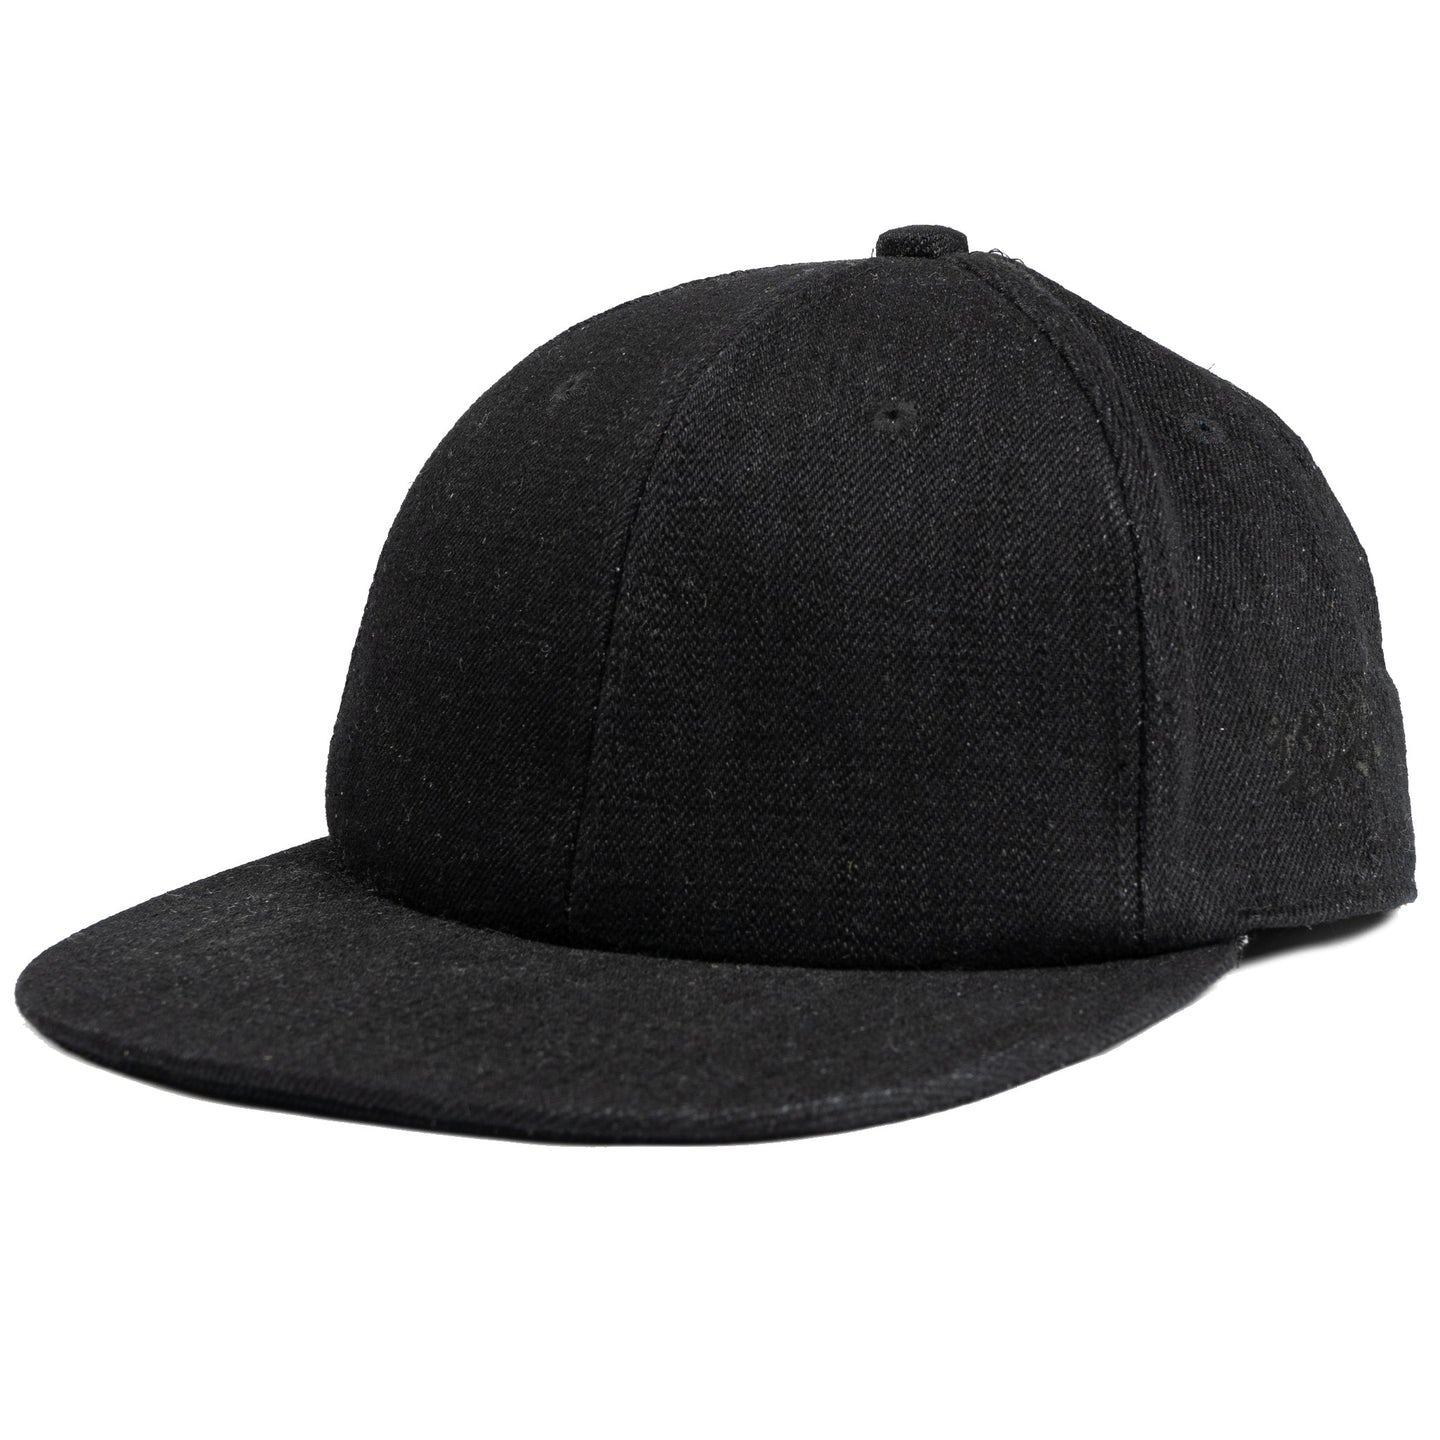 Baseball Cap - Japan Heritage Selvedge - Black